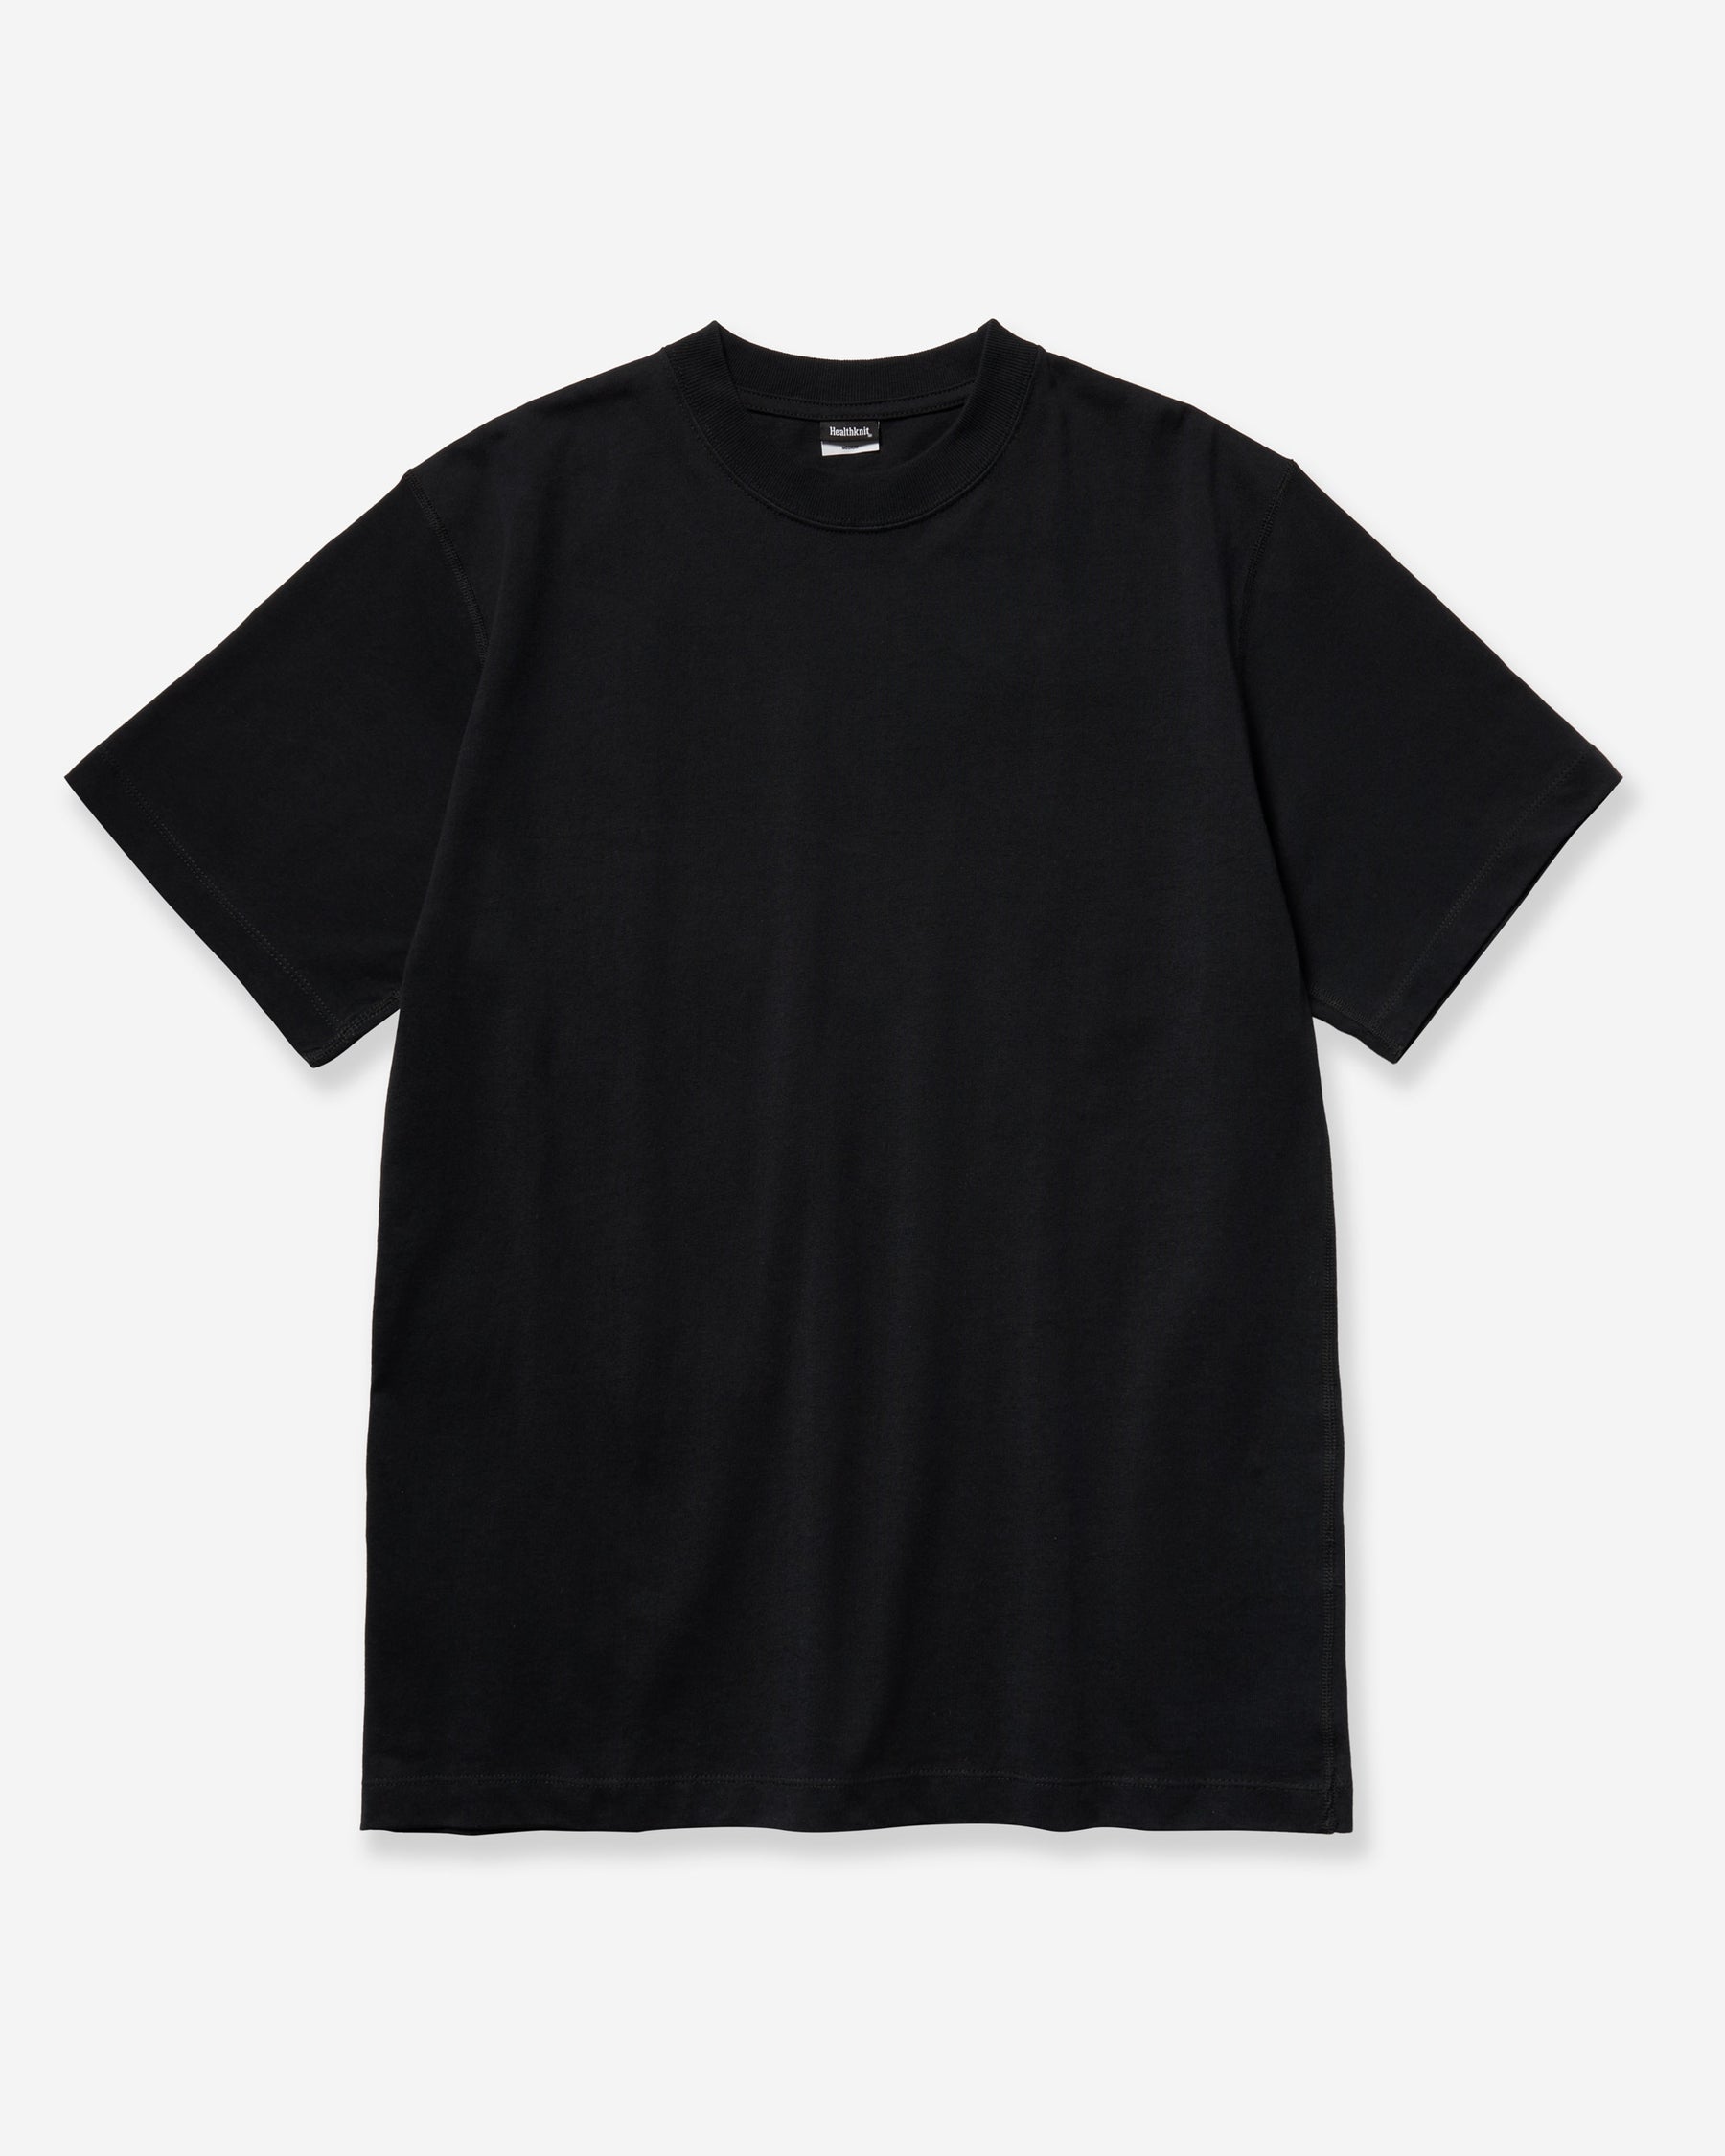 S/S T-Shirt - Black